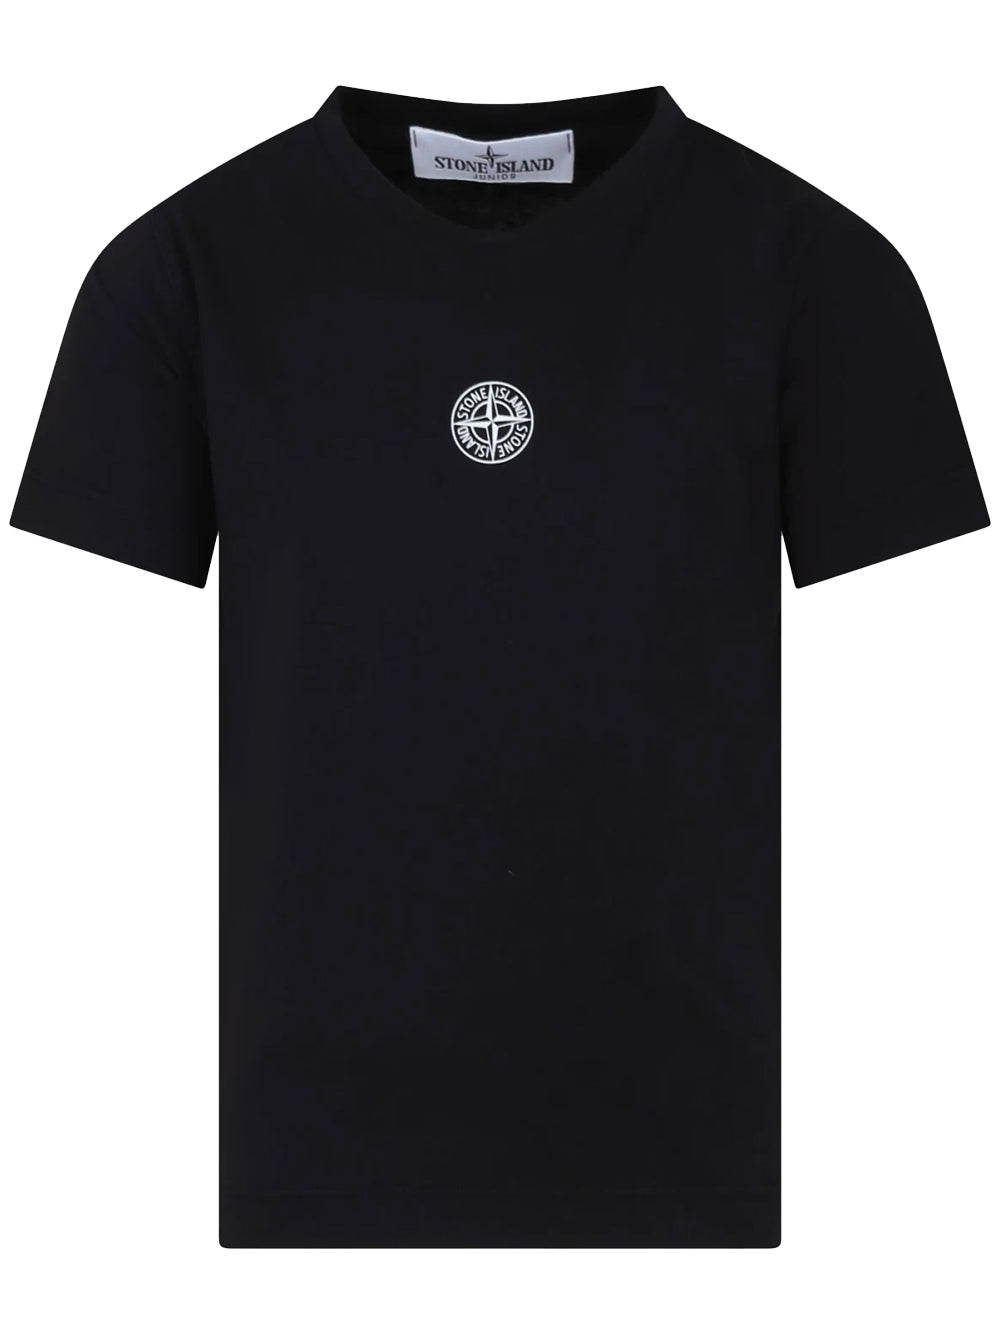 STONE ISLAND KIDS Logo Print Back Graphic Cotton T-Shirt Black - MAISONDEFASHION.COM